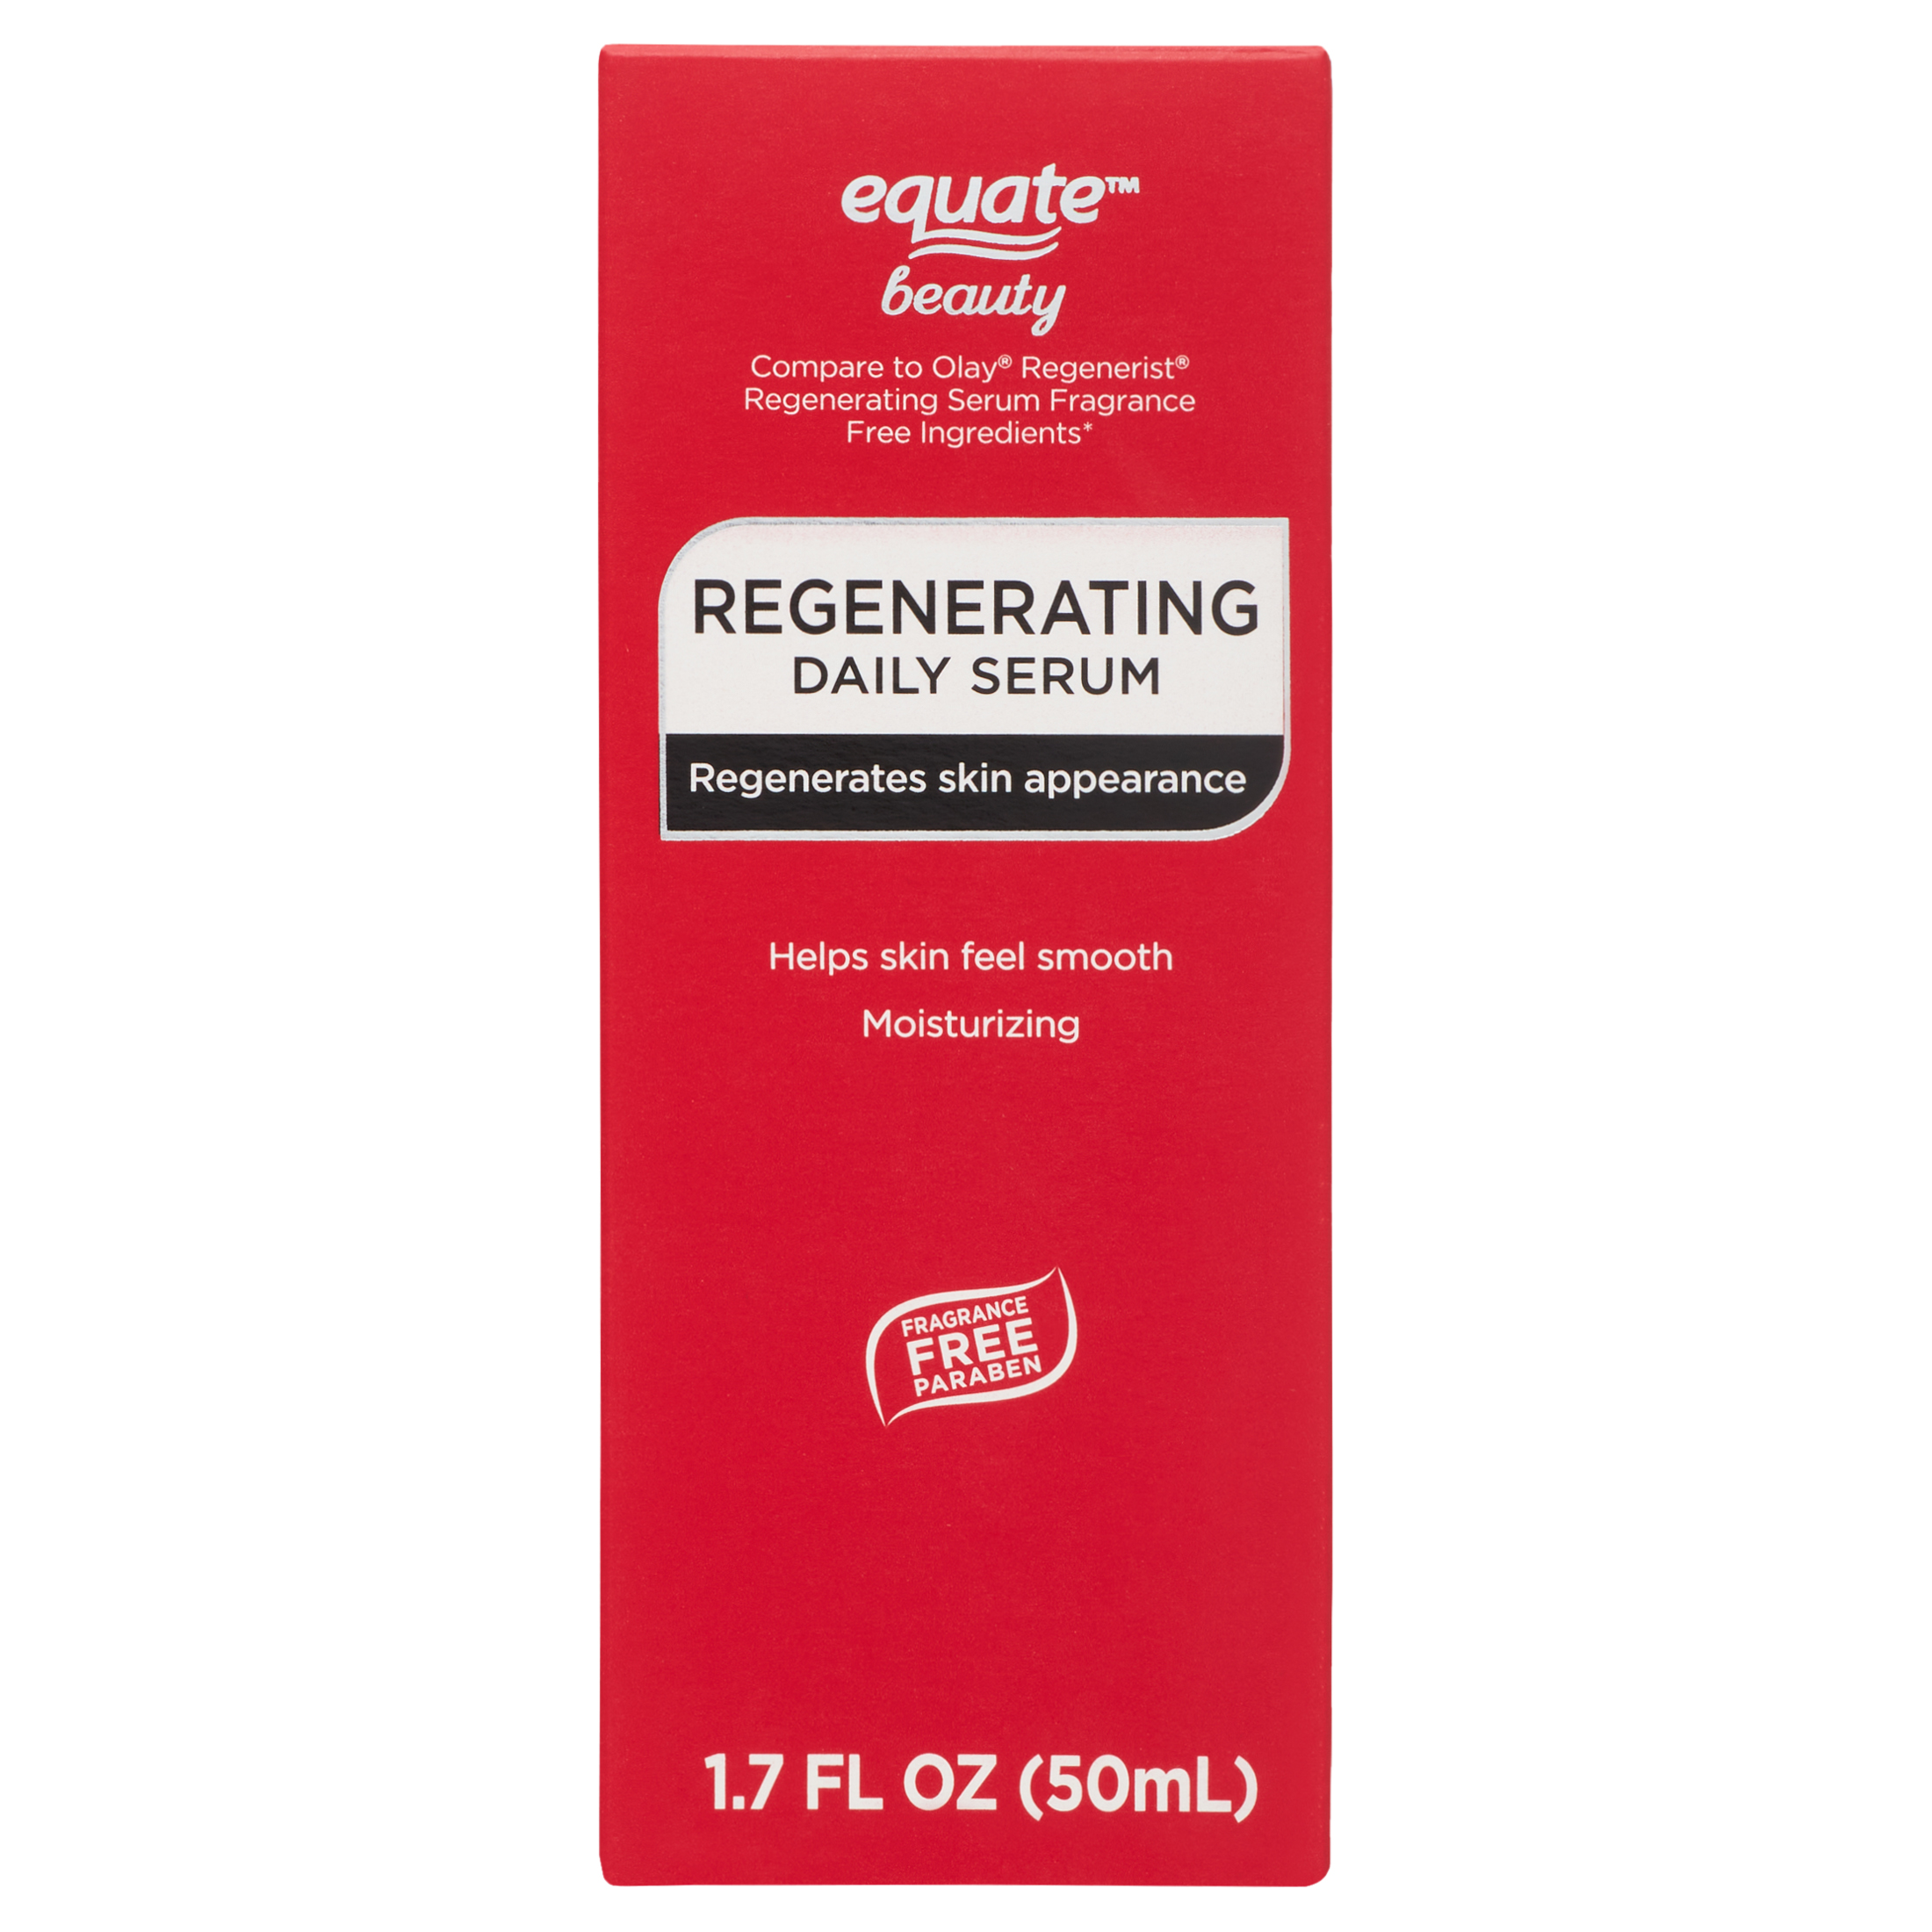 Equate Beauty Regenerating Daily Serum, 1.7 Fl oz - image 2 of 8